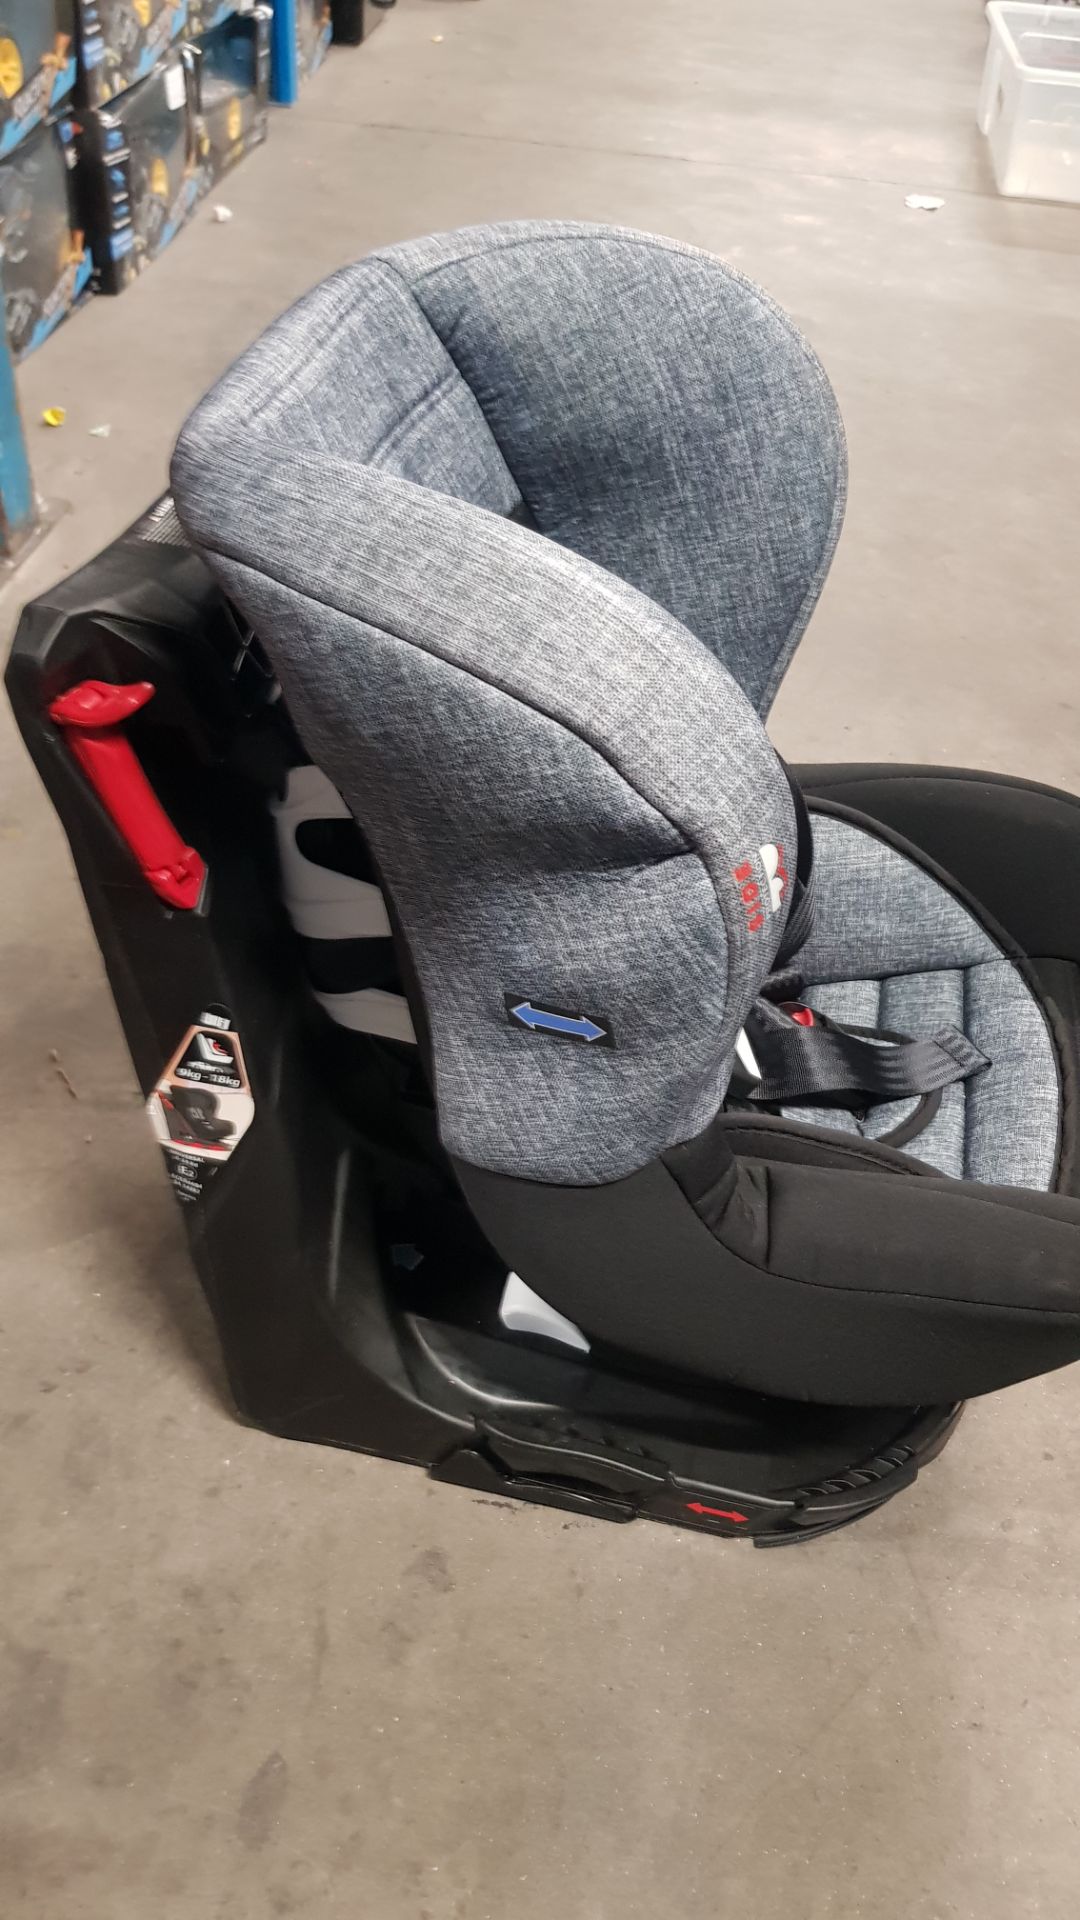 Description: (6/6J) 2x Nania Baby Car Seats To Include 1x Nania Revo Sp 0-18kg 360 Swivel Car Seat - Image 14 of 15